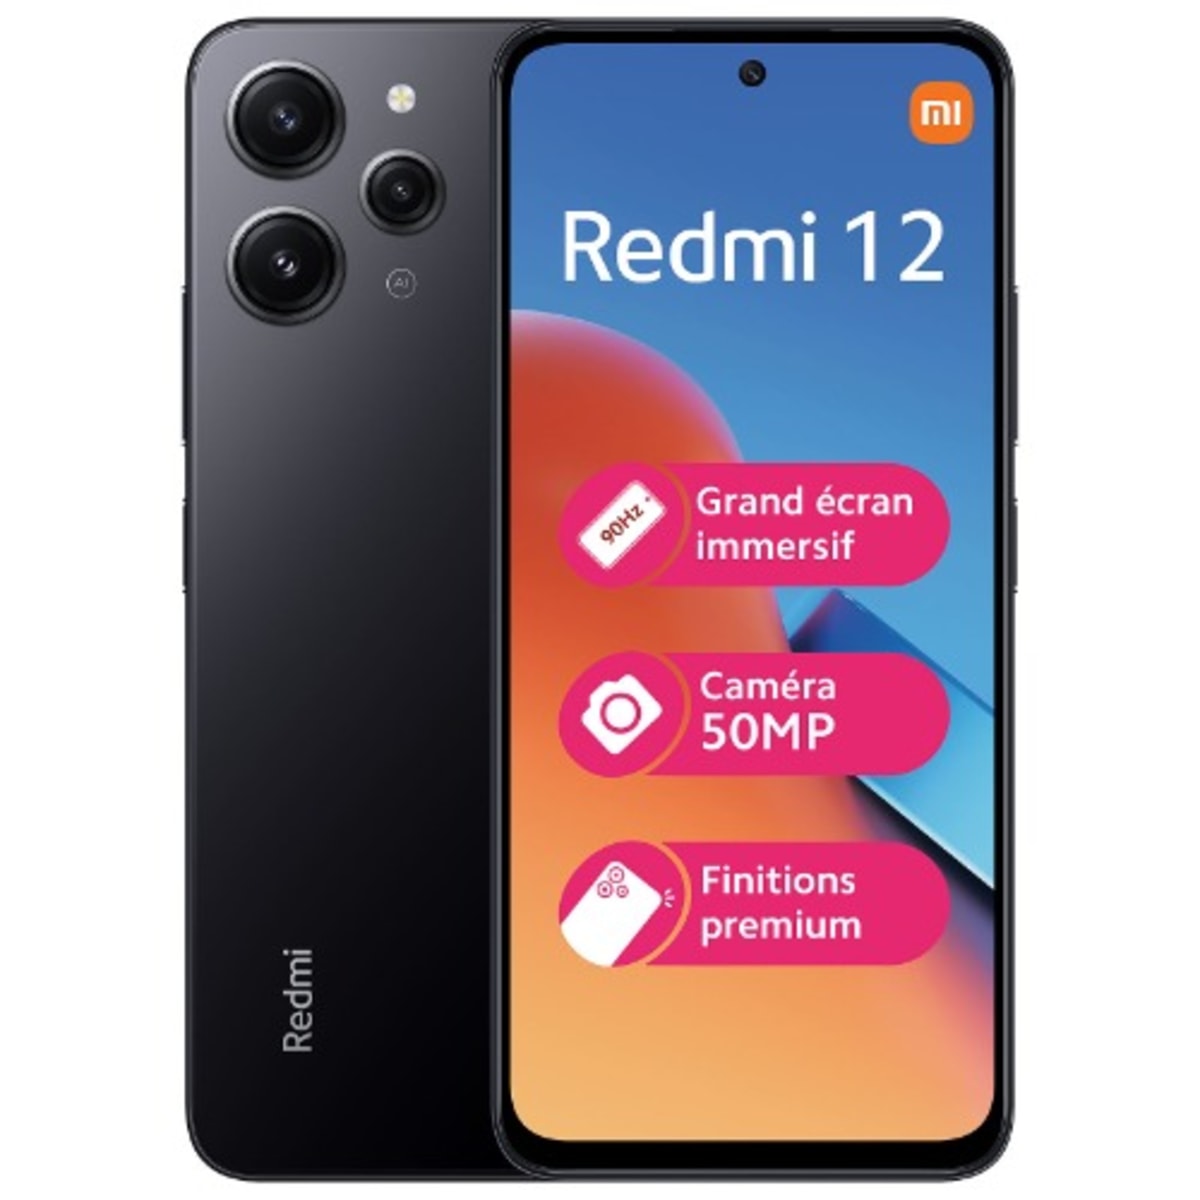 Smartphone Xiaomi Redmi 12 Dual Sim 6.79 4GB/128GB Black